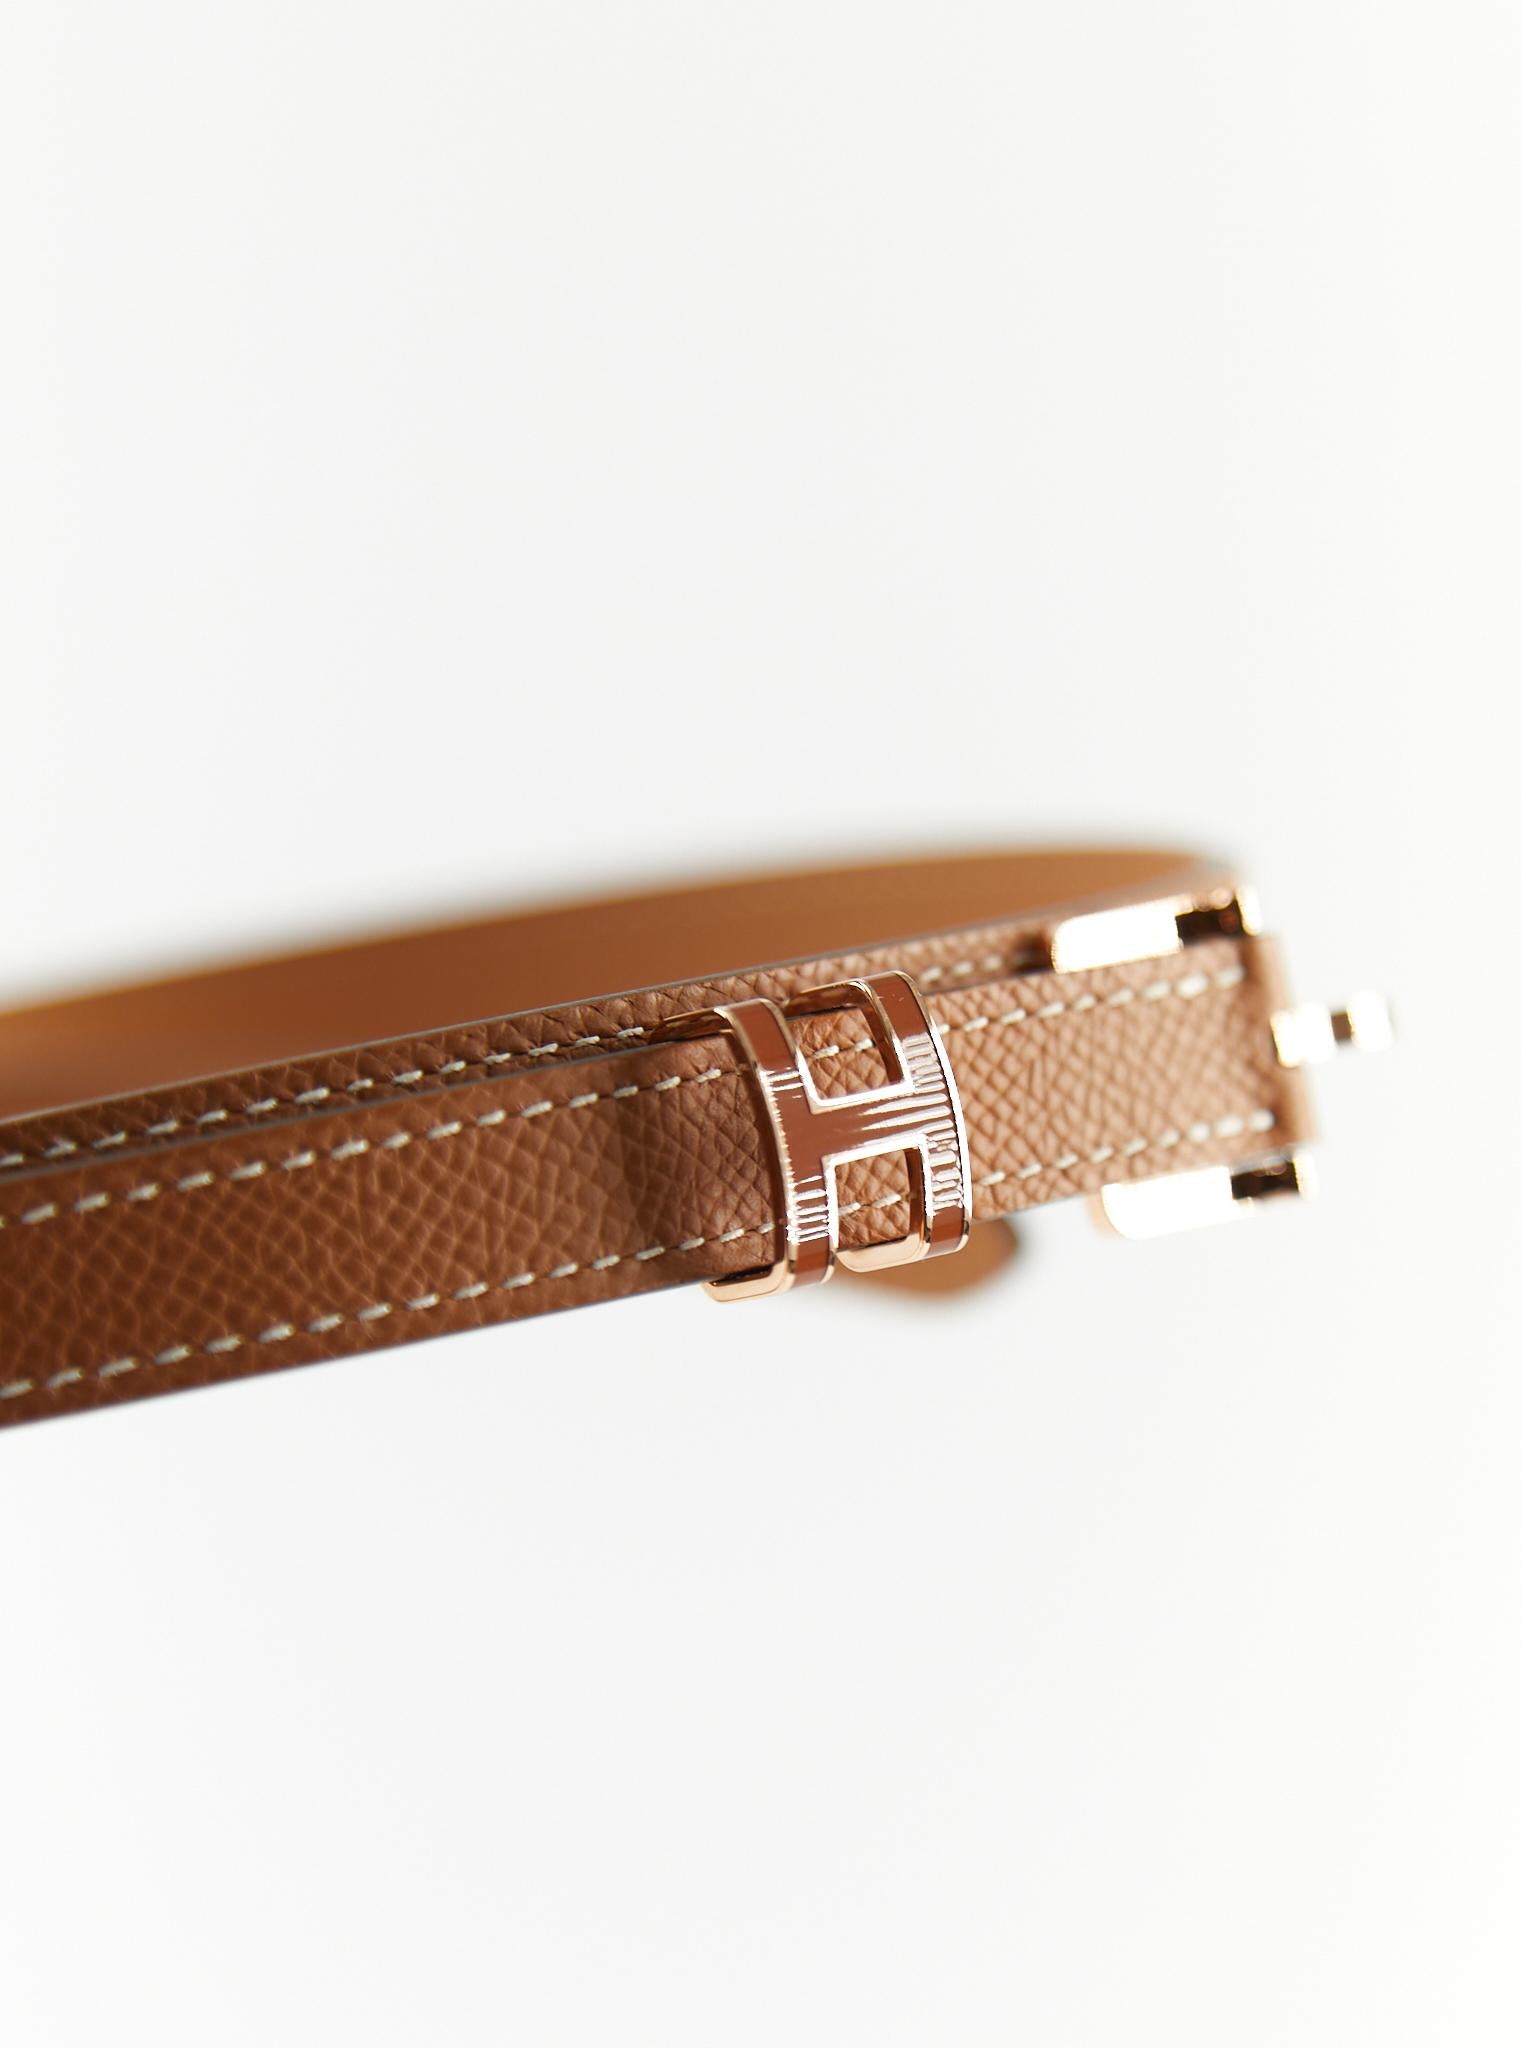 Hermès Pop H 15 Belt in Gold

Epsom Leather with Rose Gold Hardware

Size: 85cm

Width: 15mm